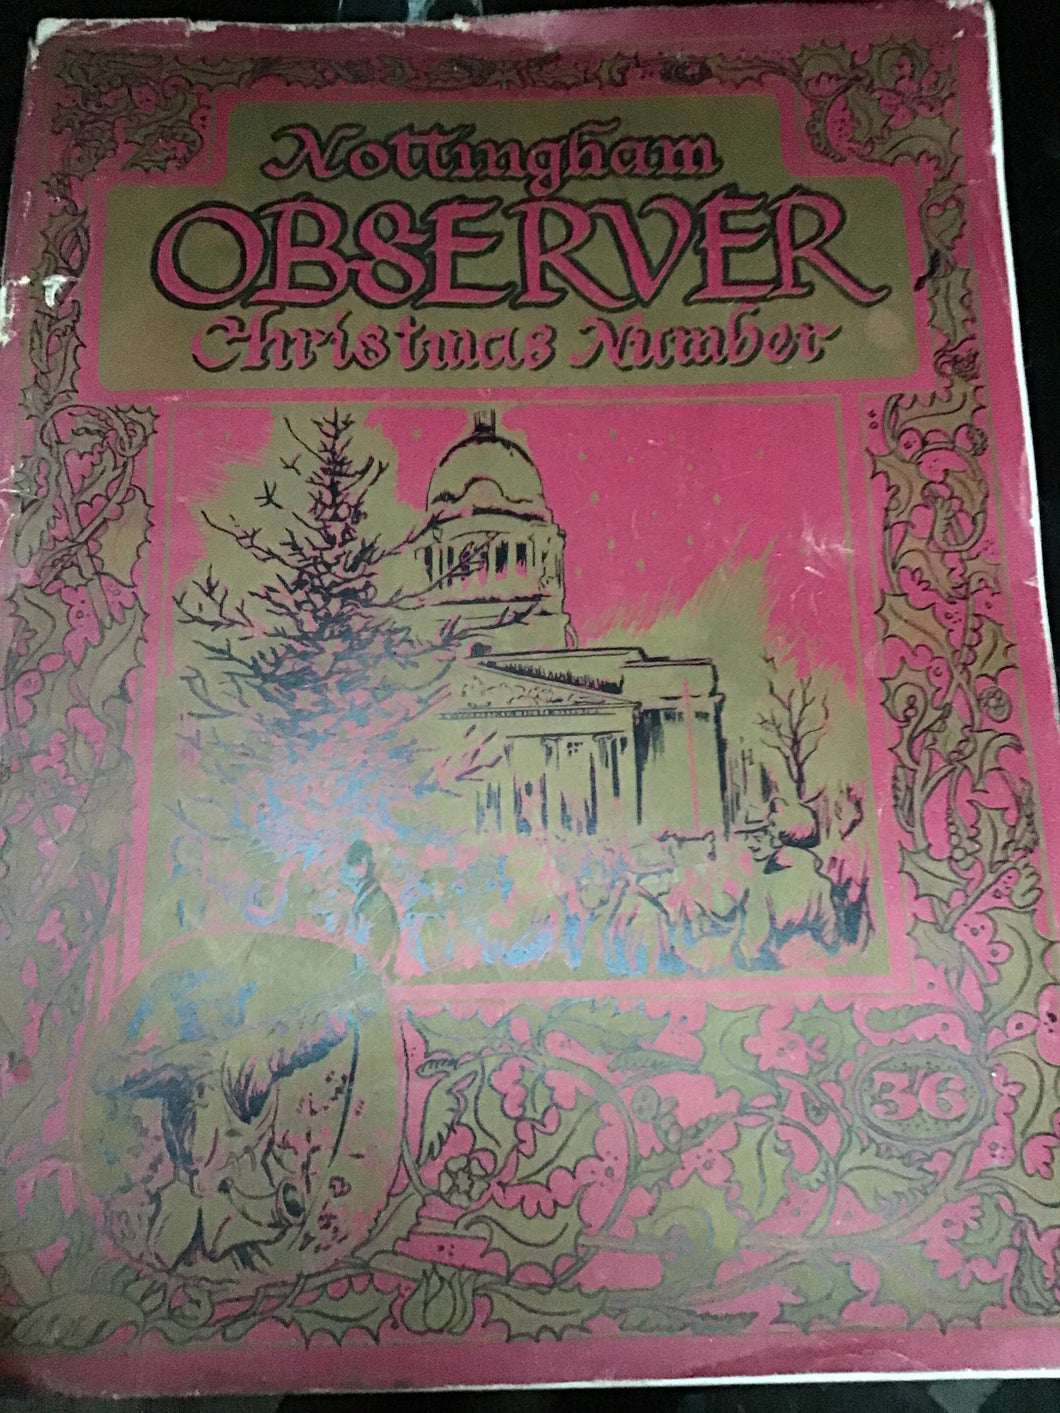 Nottingham observer Christmas and number 1956 paperback magazine